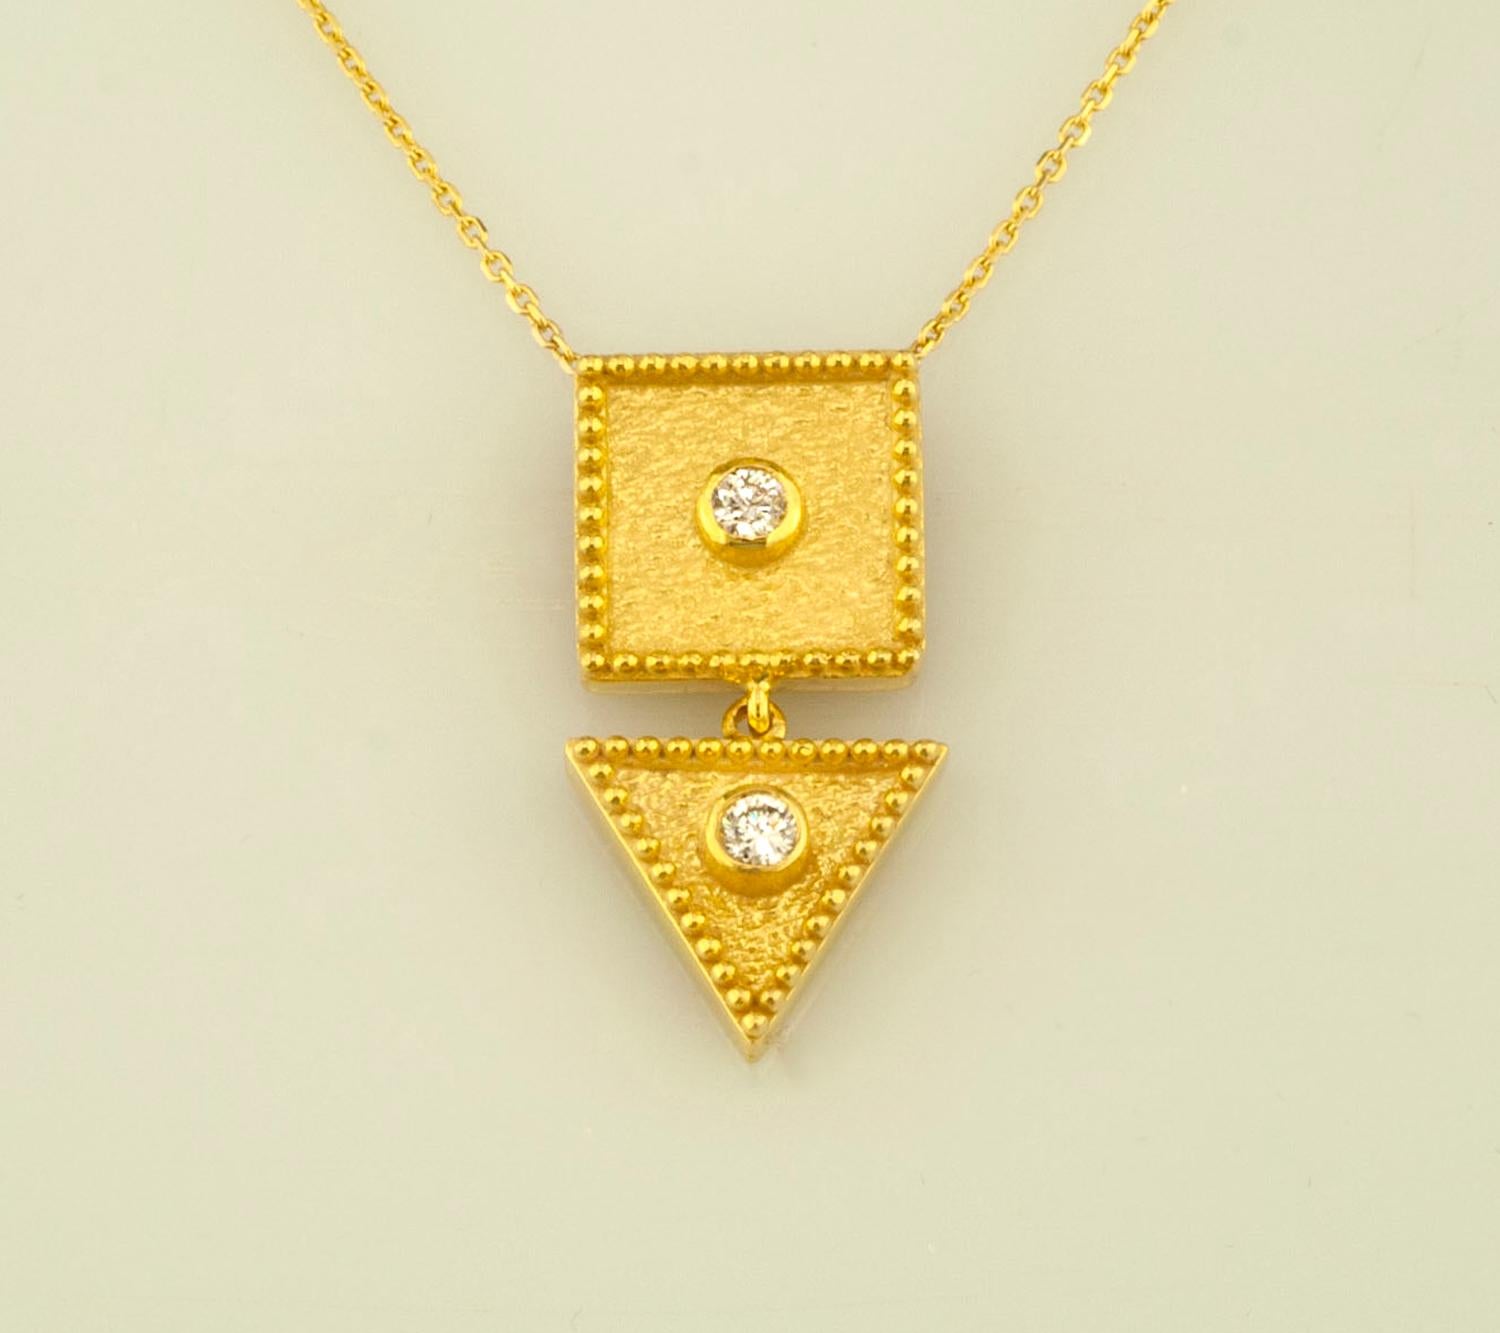 Brilliant Cut Georgios Collections 18 Karat Yellow Gold Drop Diamond Pendant Necklace Chain For Sale